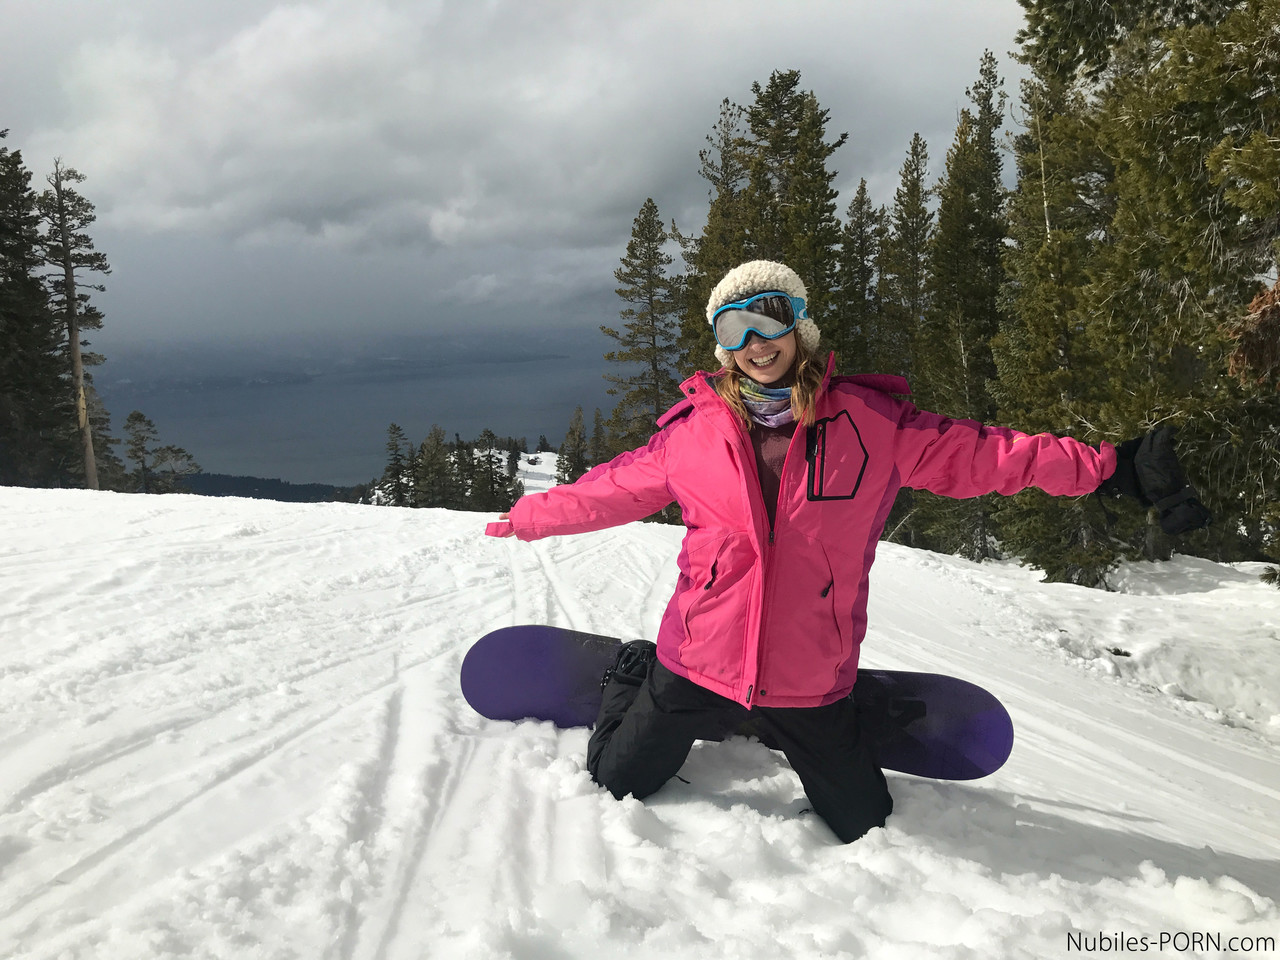 Sexy snowboarders Sierra Nicole & Kristen Scott have pre-FFM fun on the slopes 色情照片 #427844894 | Nubiles Porn Pics, Kristen Scott, Sierra Nicole, Blonde, 手机色情